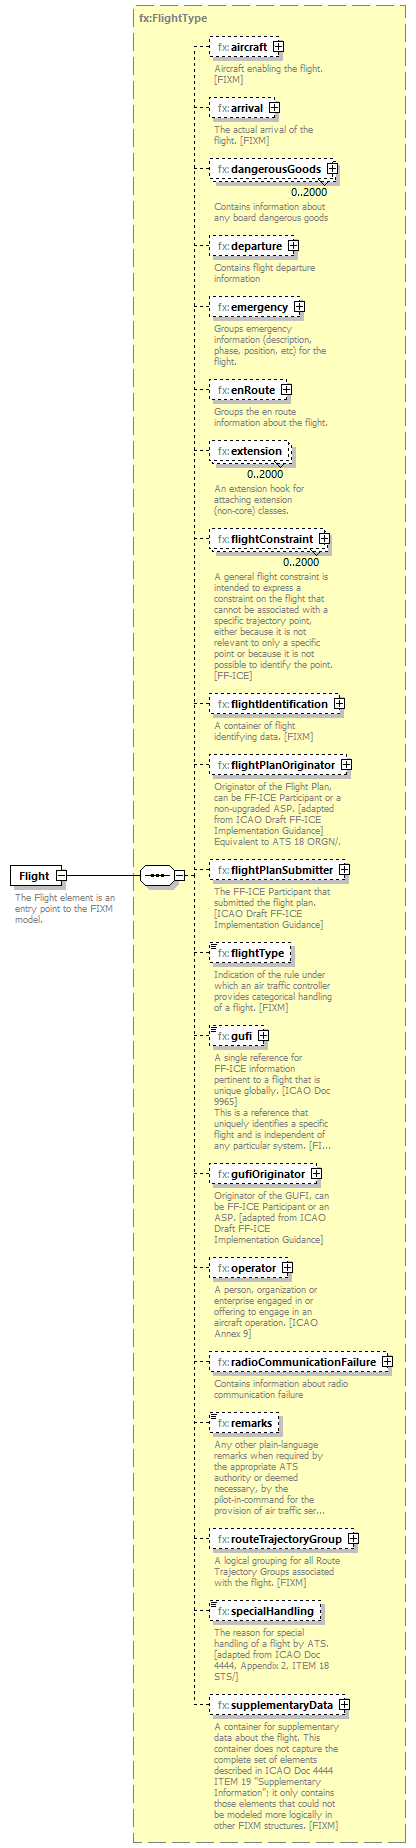 BasicMessage_diagrams/BasicMessage_p327.png